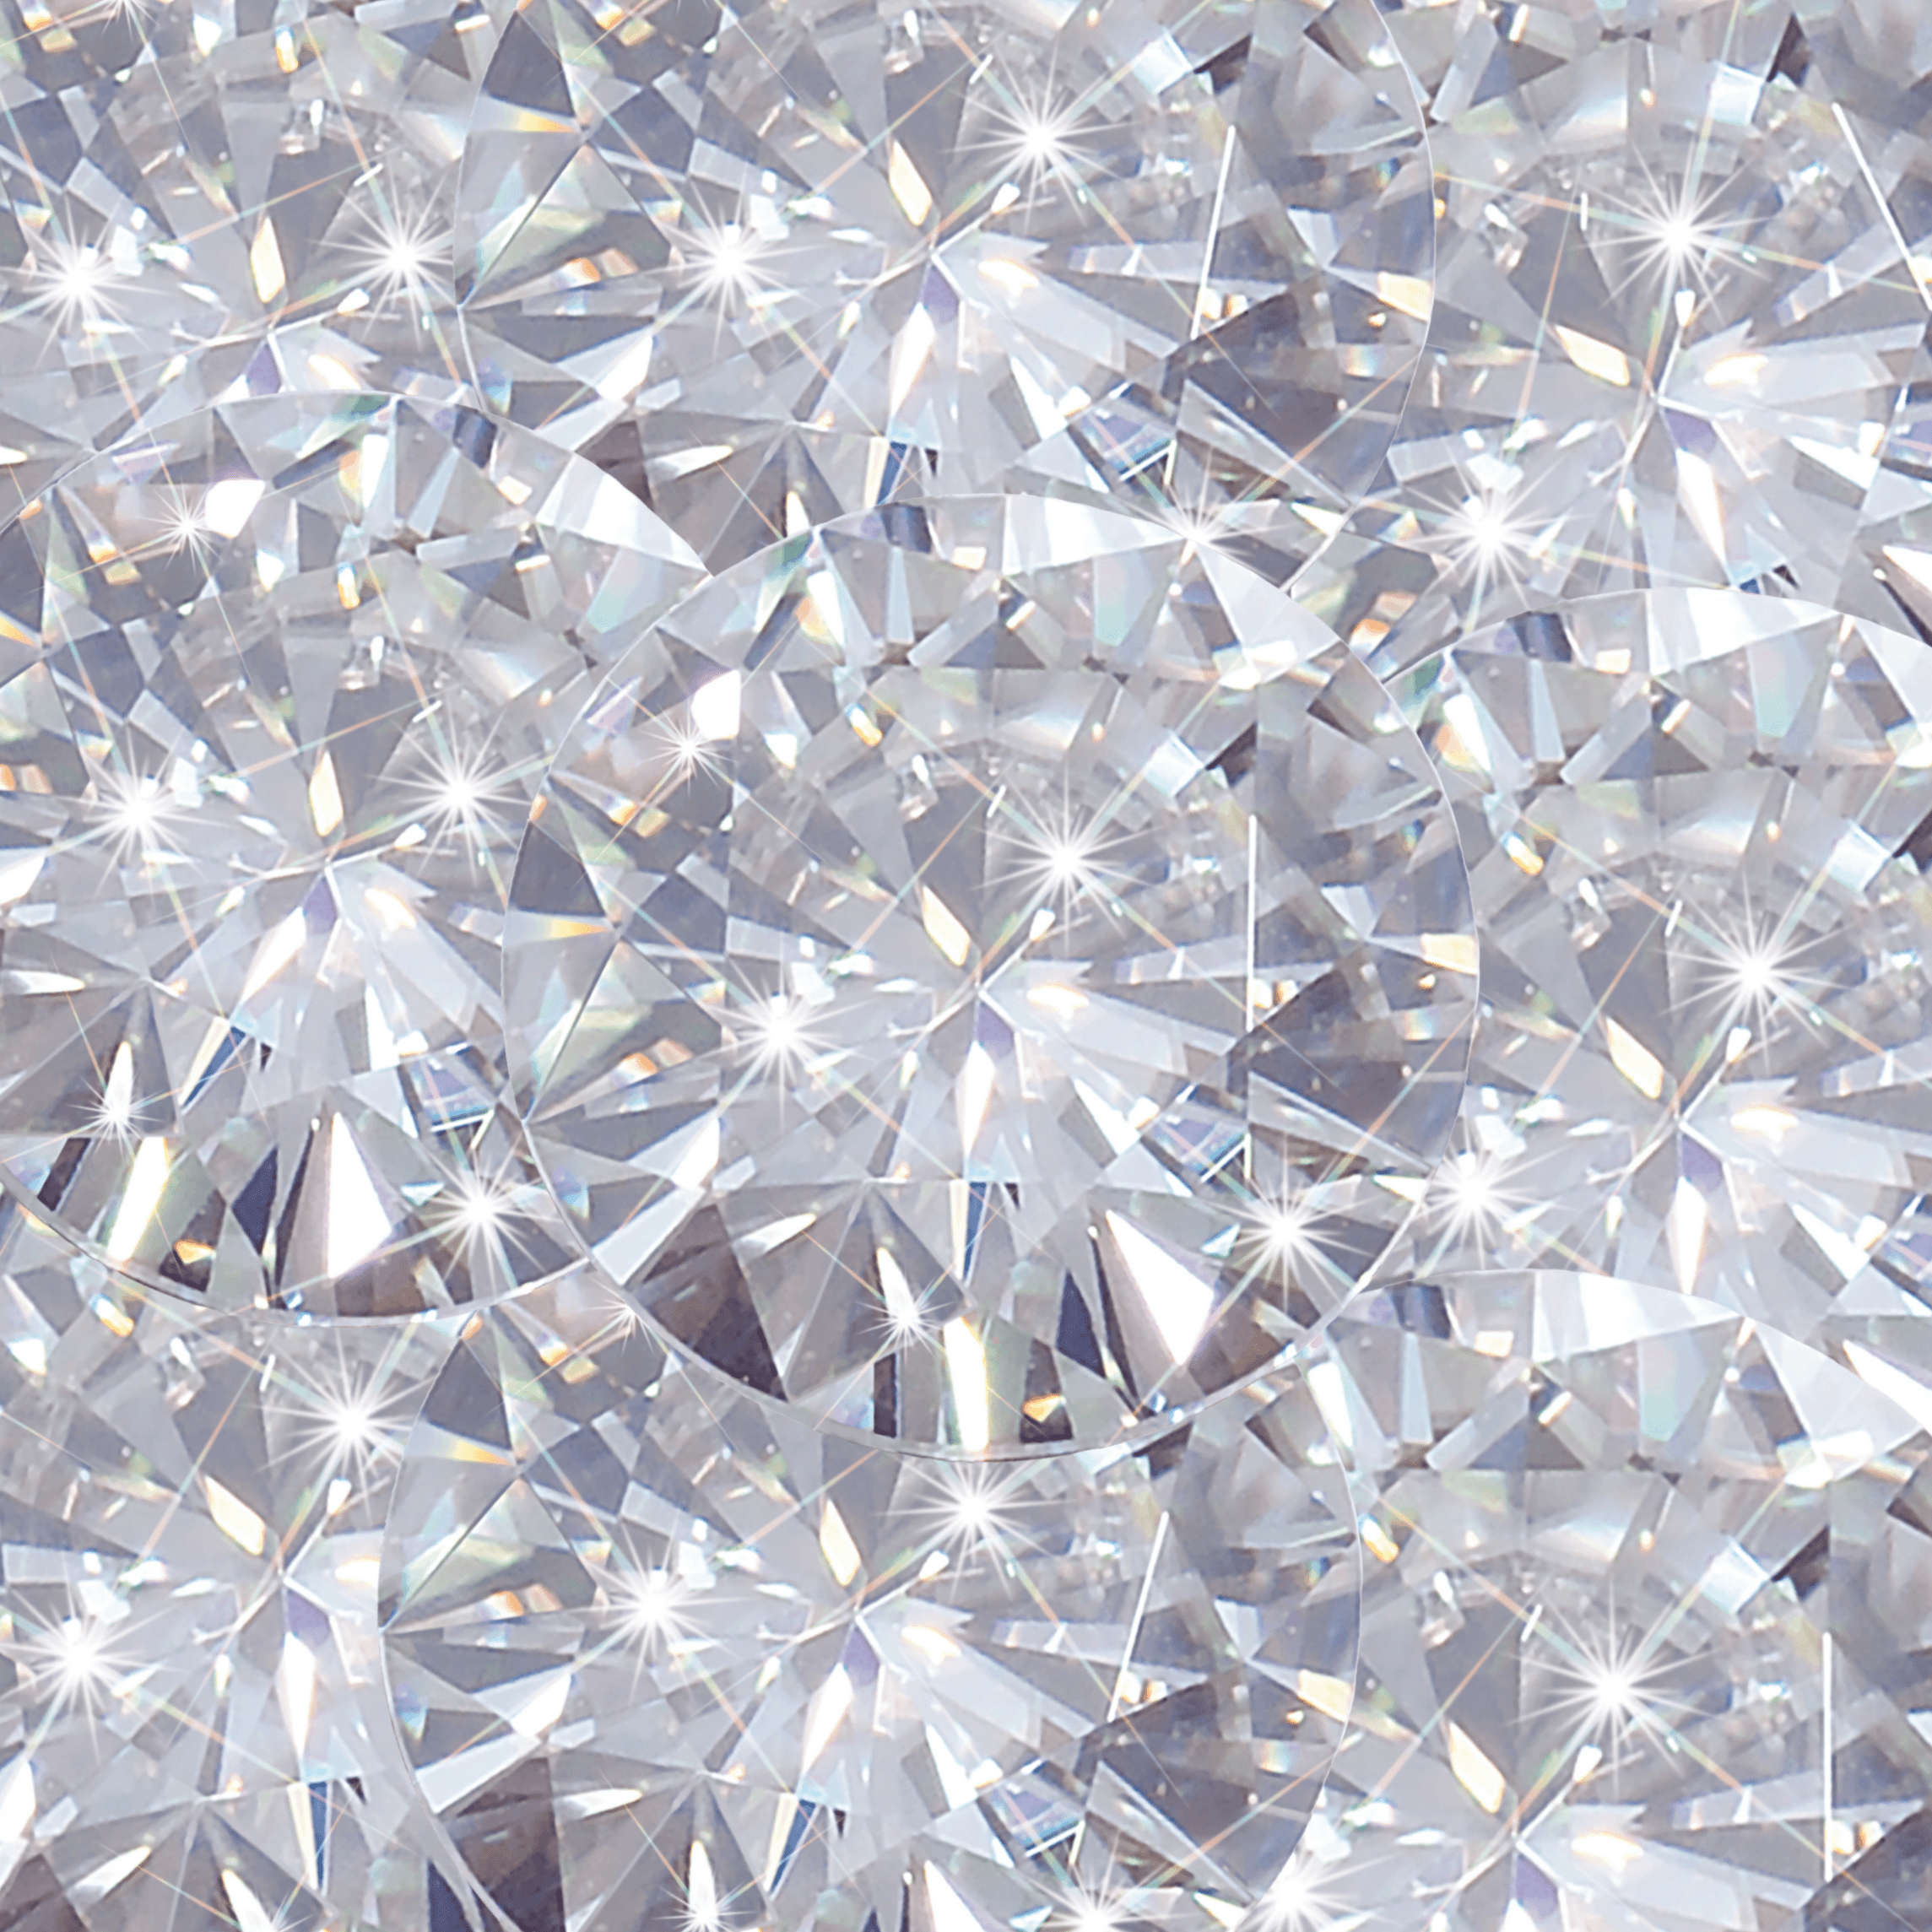 A large pile of diamonds - Diamond